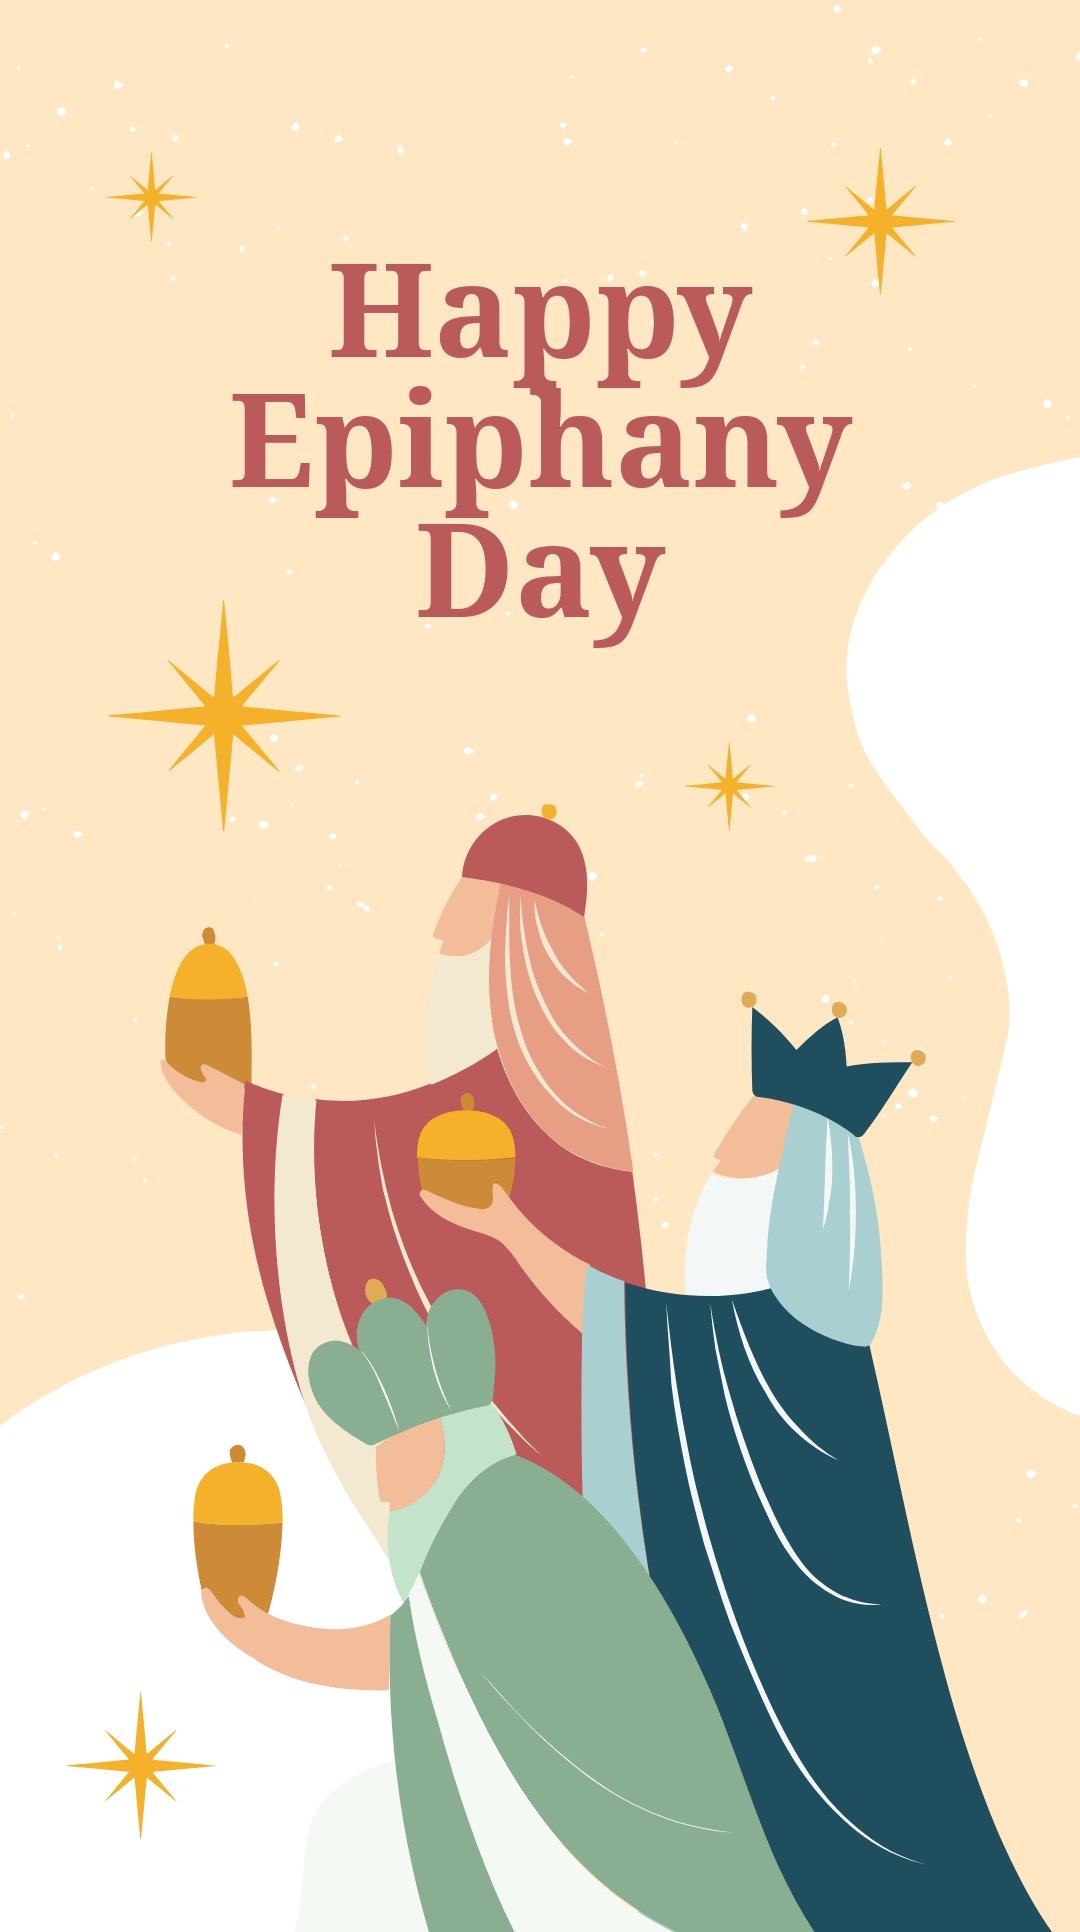 Happy Epiphany Day Whatsapp Post Template